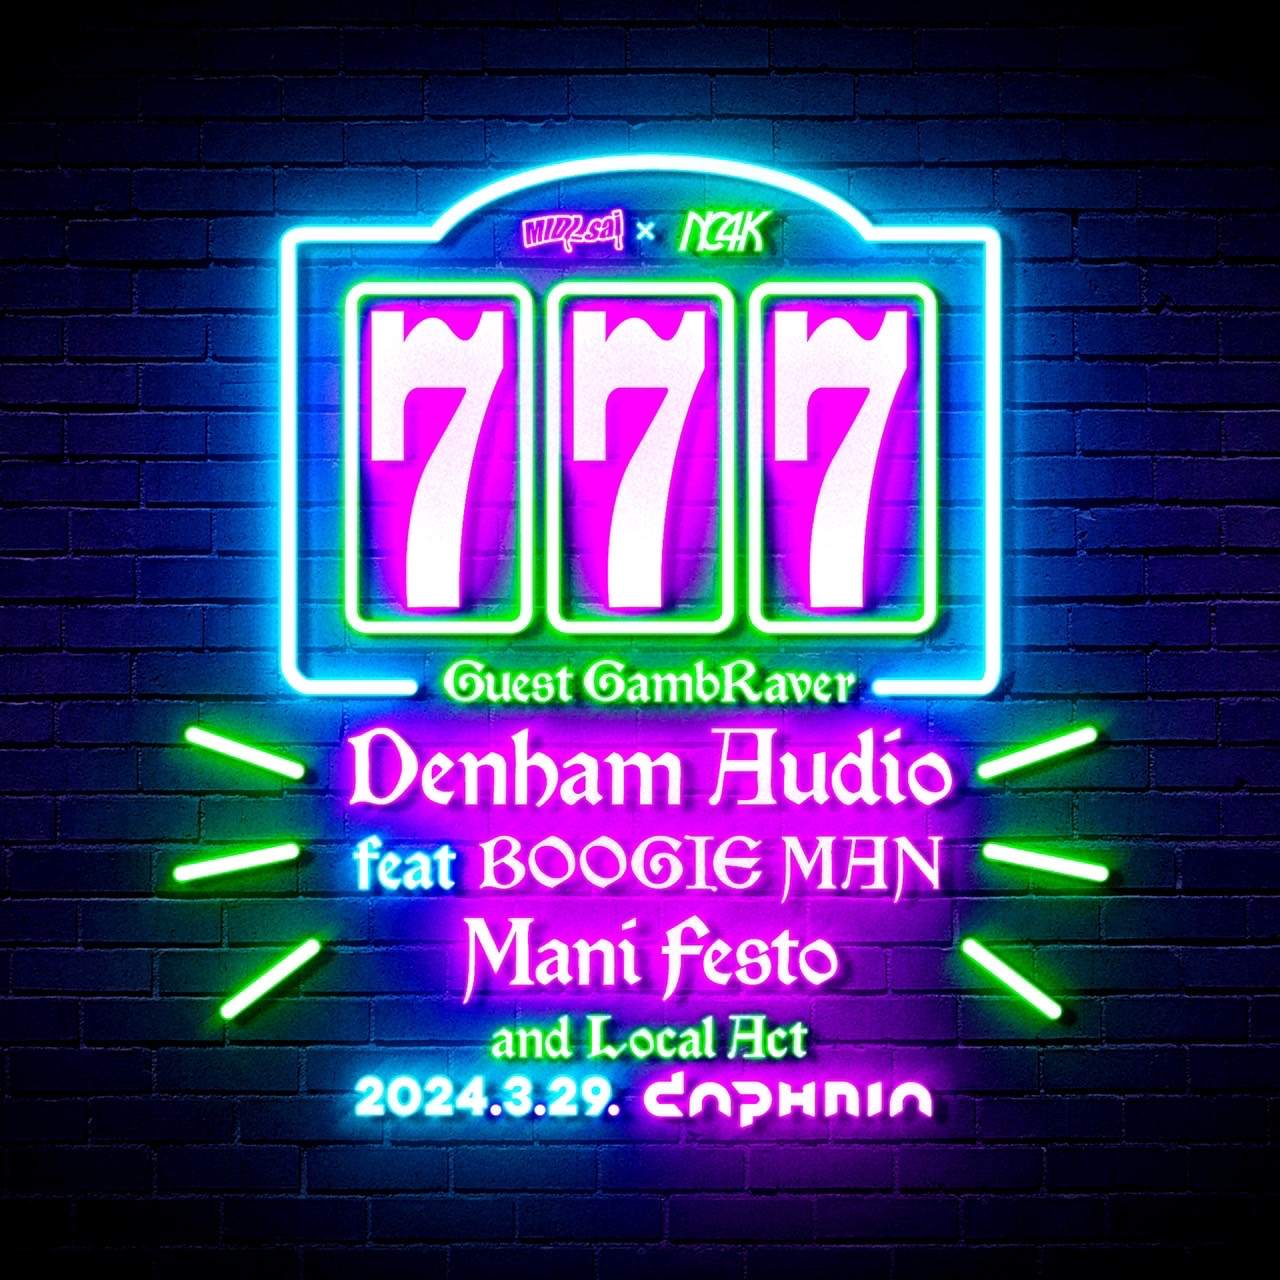 MIDI_sai × NC4K Pres. 777 with Denham Audio Mani Festo BOOGIE MAN - フライヤー裏